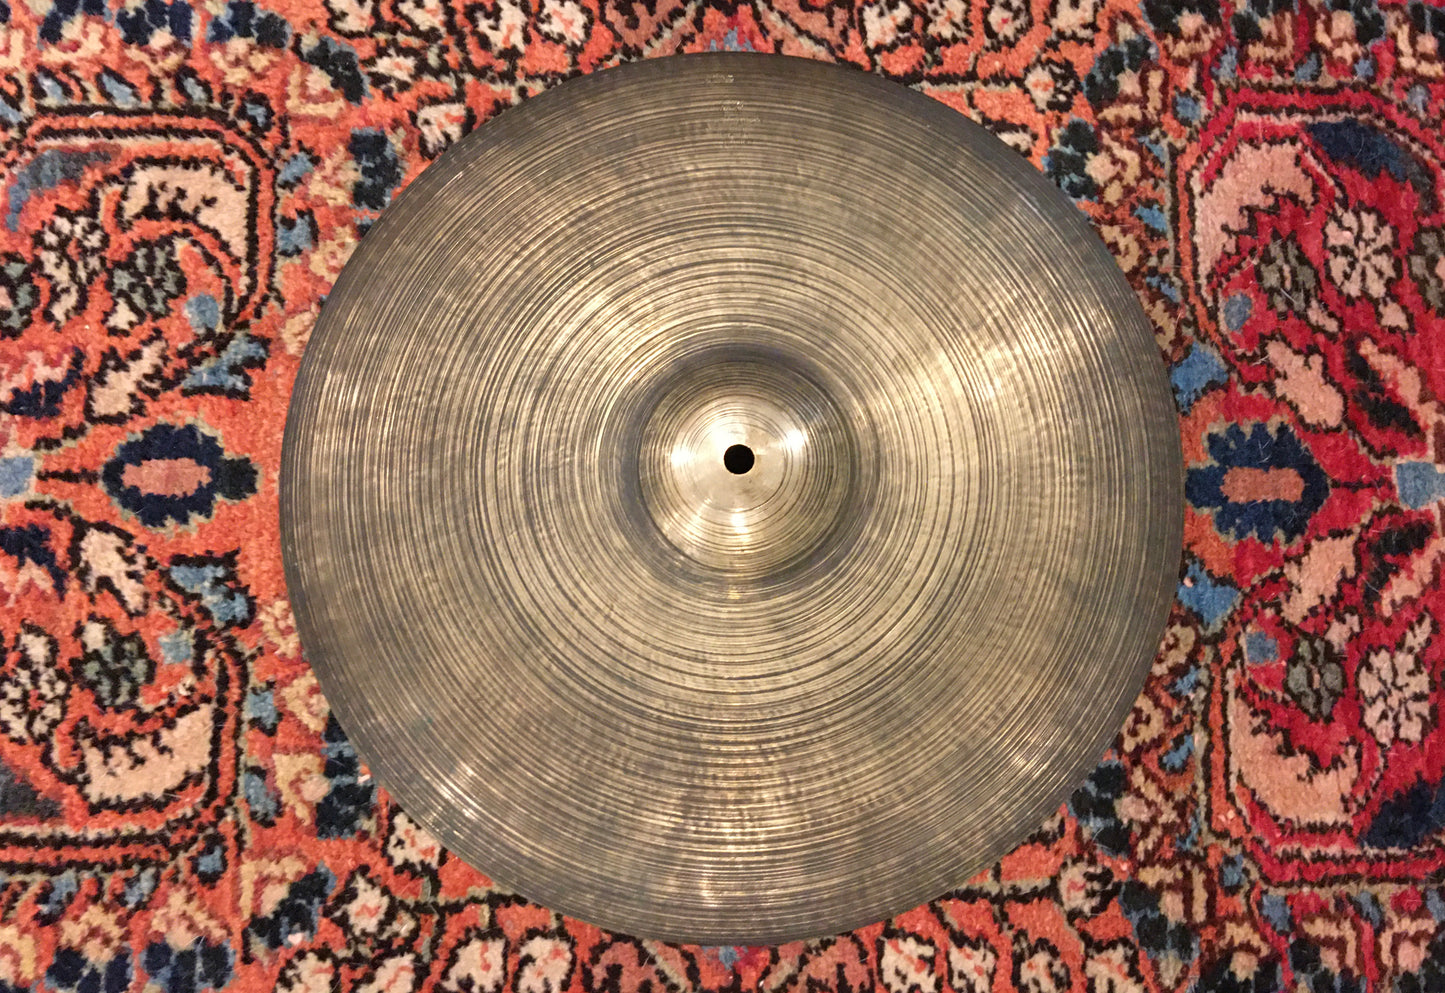 14" Zildjian K Istanbul Old Stamp IVb Cymbal 862g #594